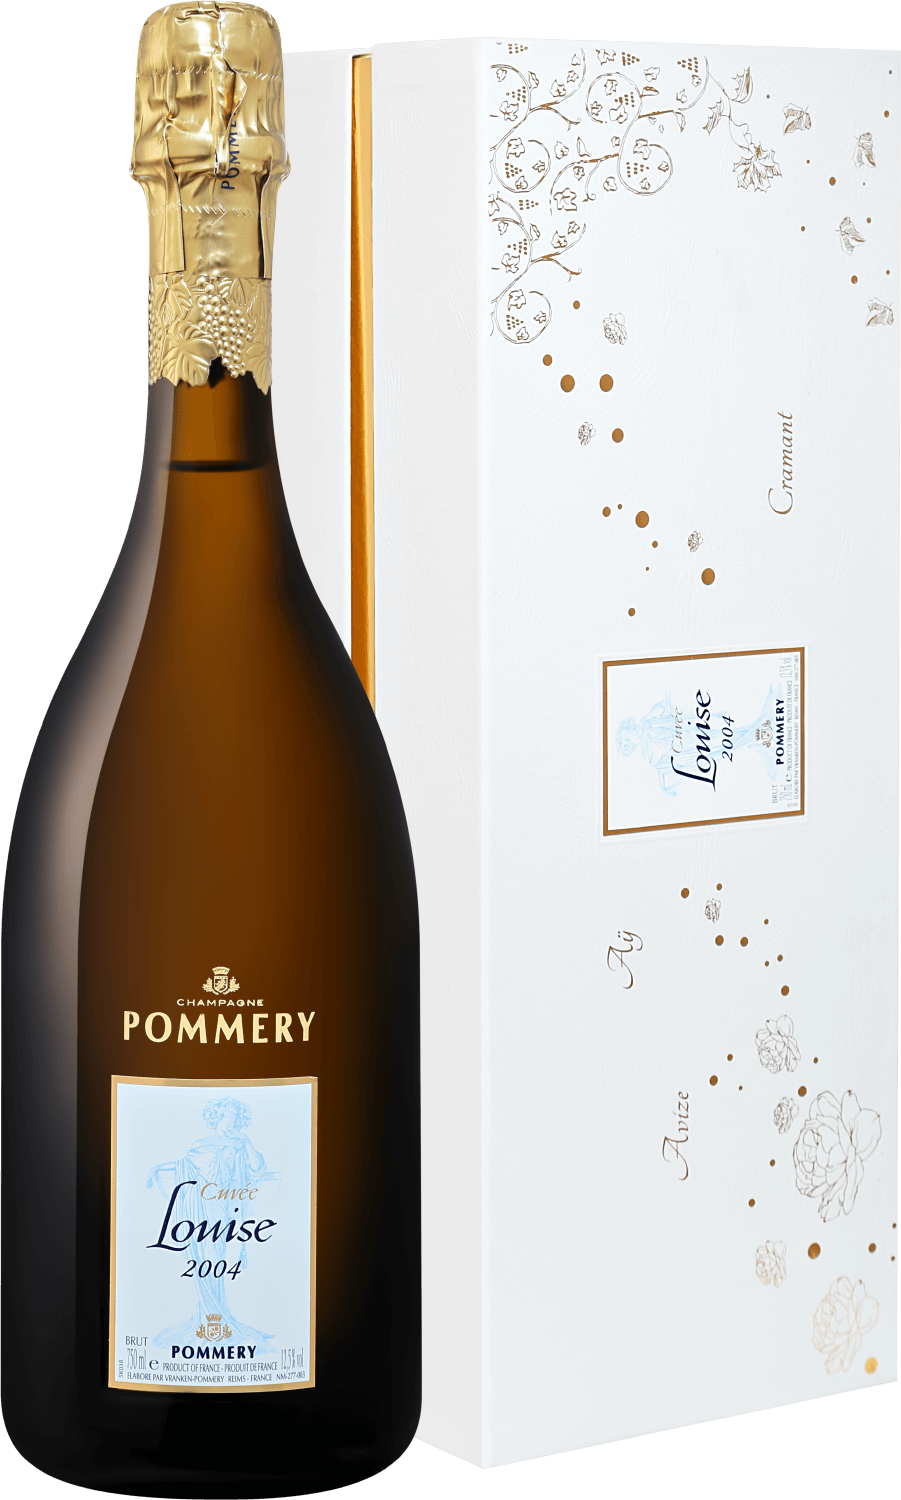 Pommery Cuvée Louise Brut Millesime Champagne AOC (gift box) vilmart cuvée rubis brut premier cru champagne aoc